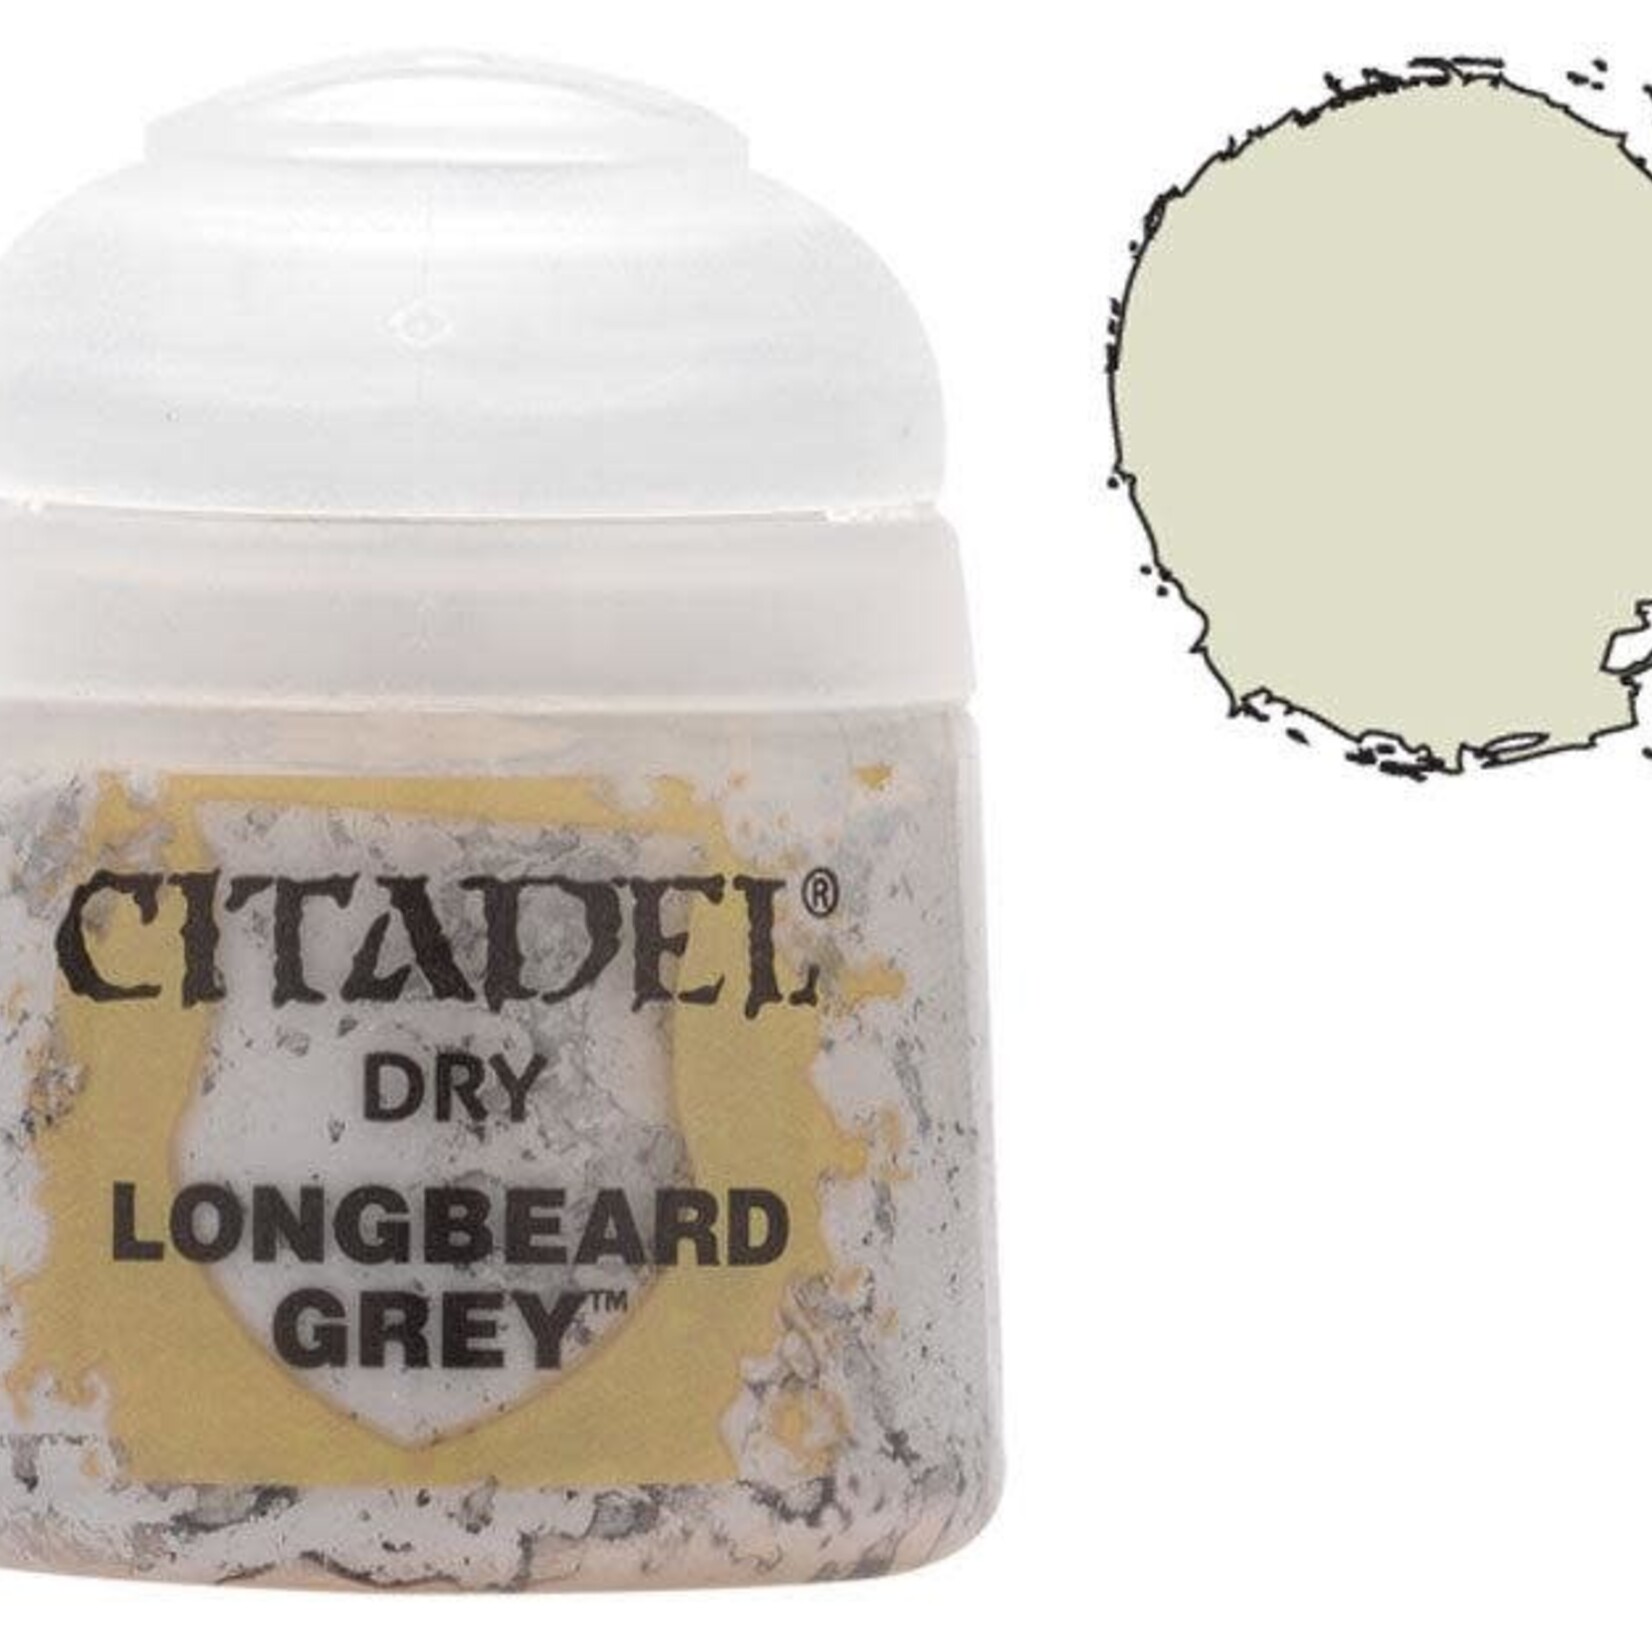 Games Workshop Citadel - Dry - Longbeard Grey